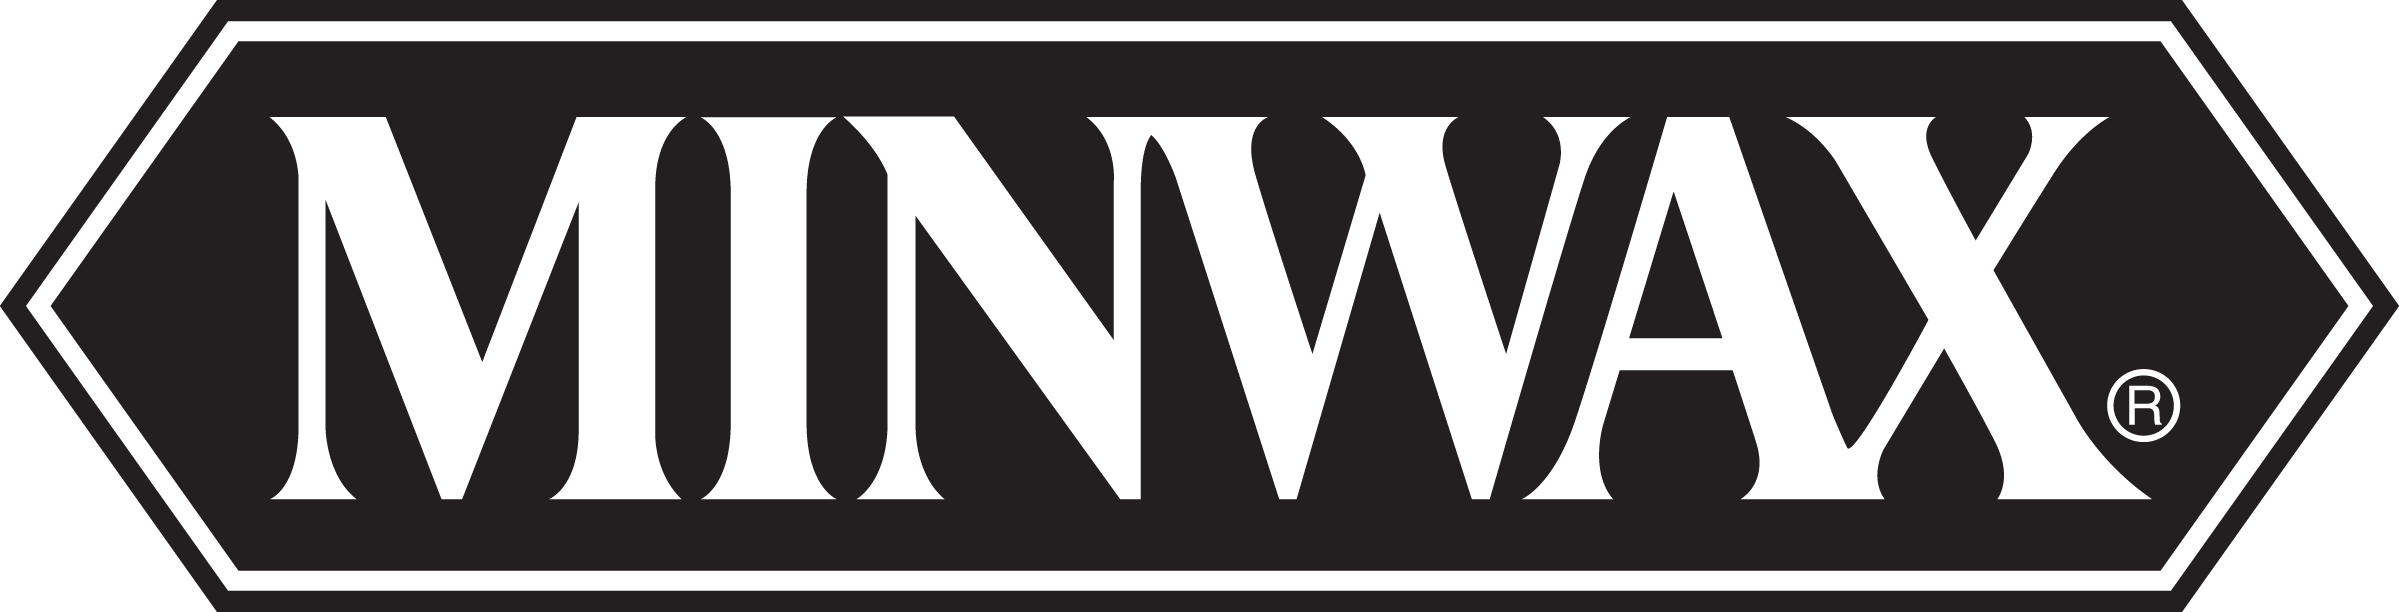 Minwax Logo - Soo Mill Minwax Logo February 2019